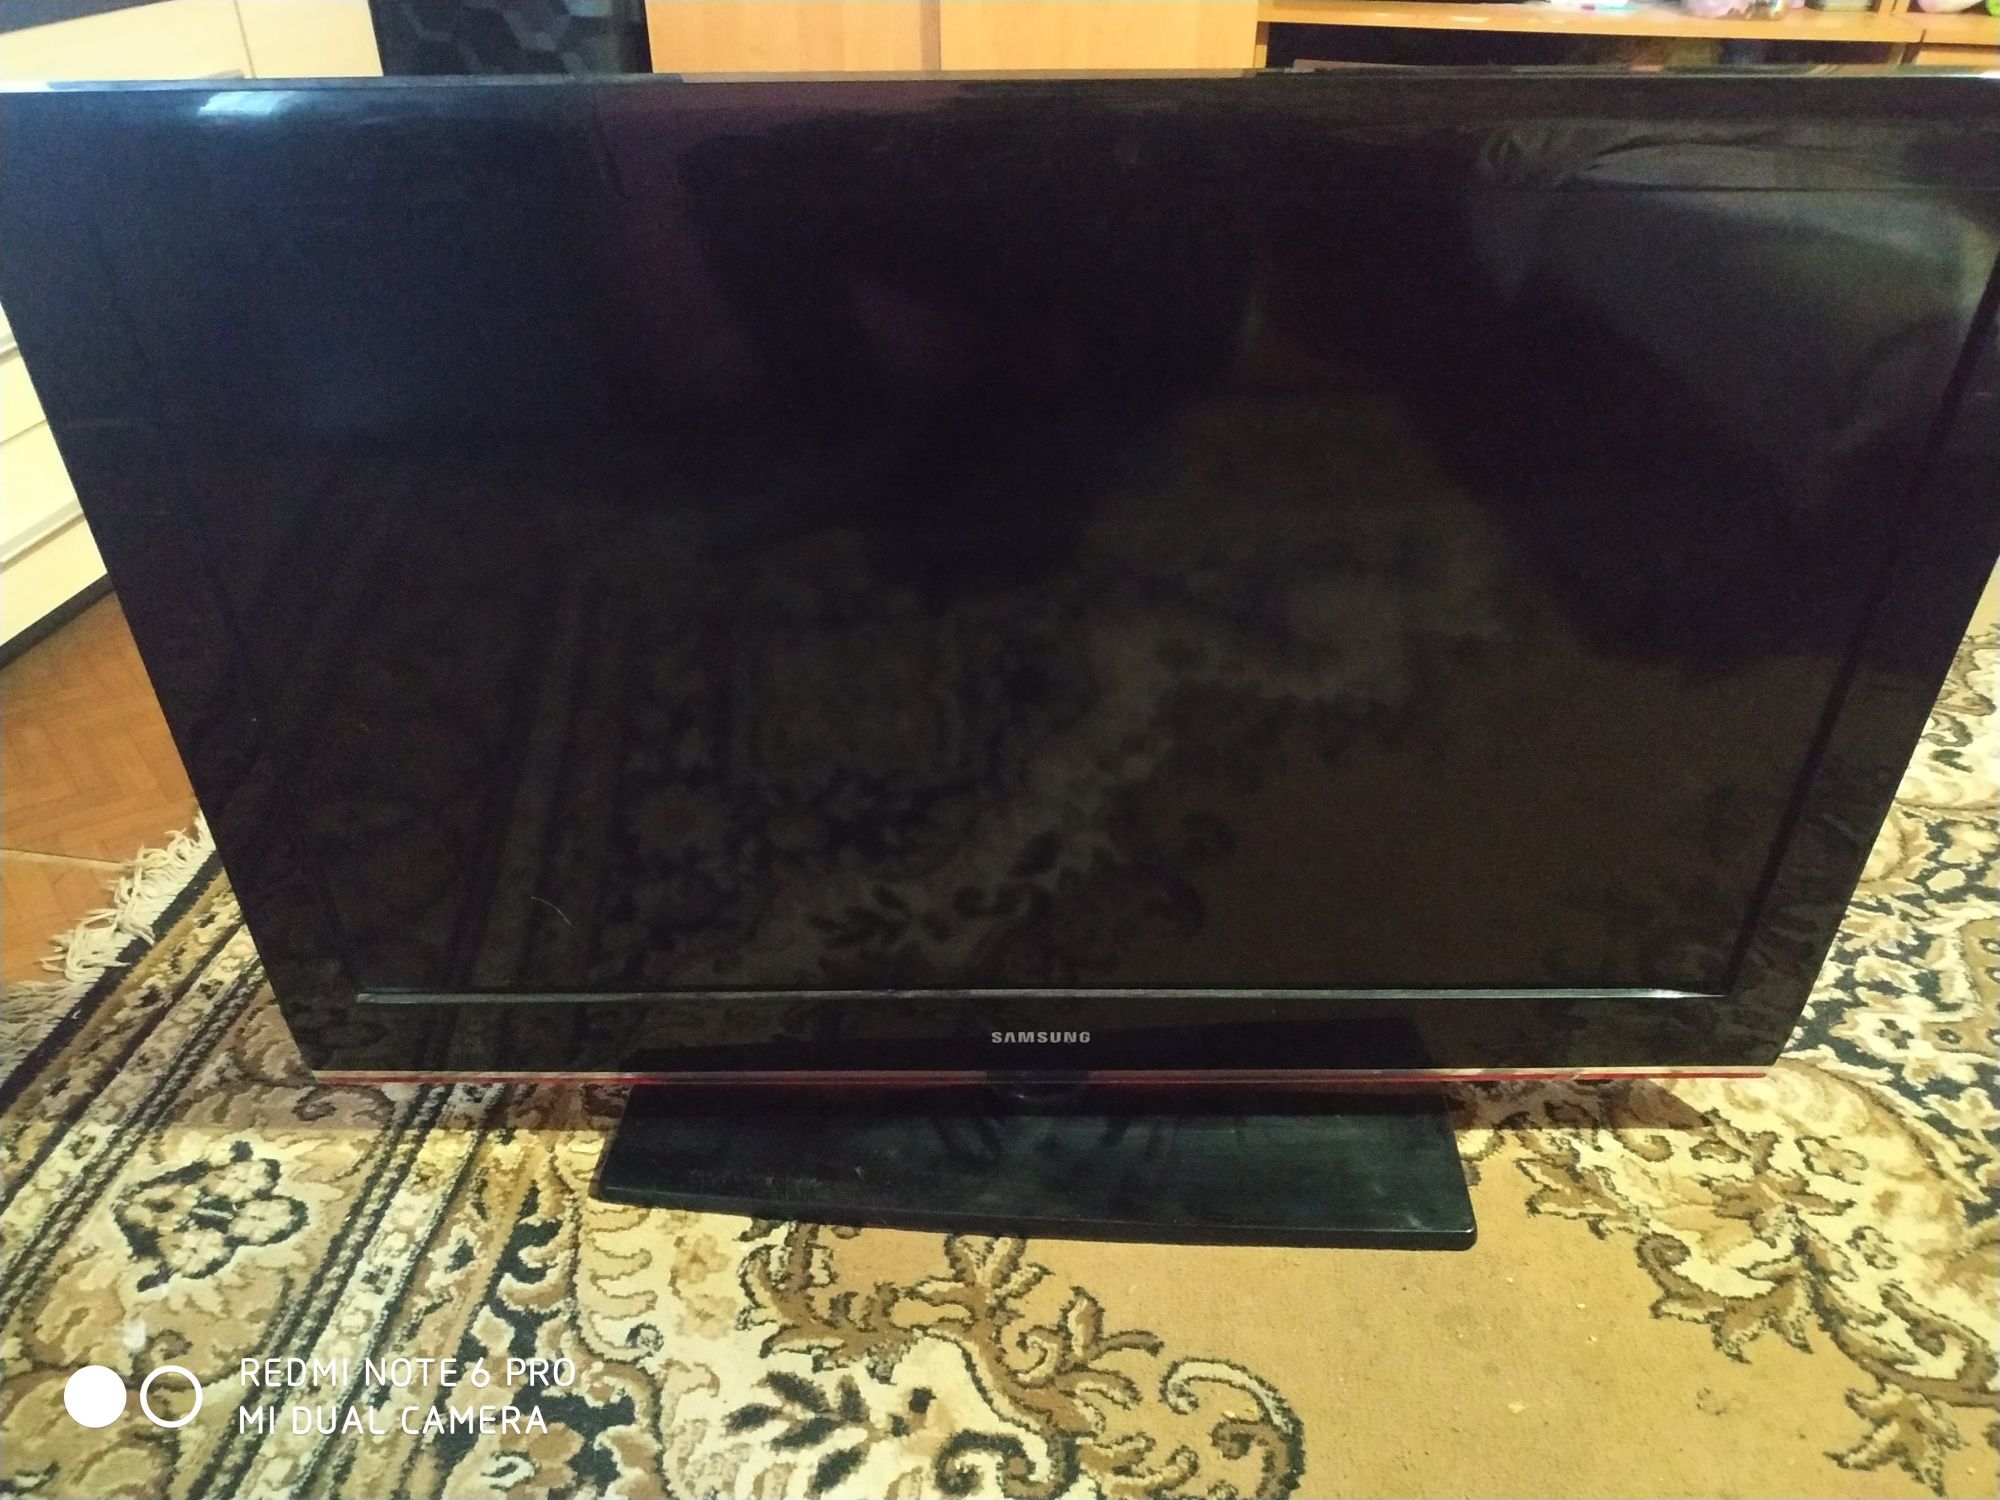 Продам плазменный телевизор Samsung model :le40b530p7w